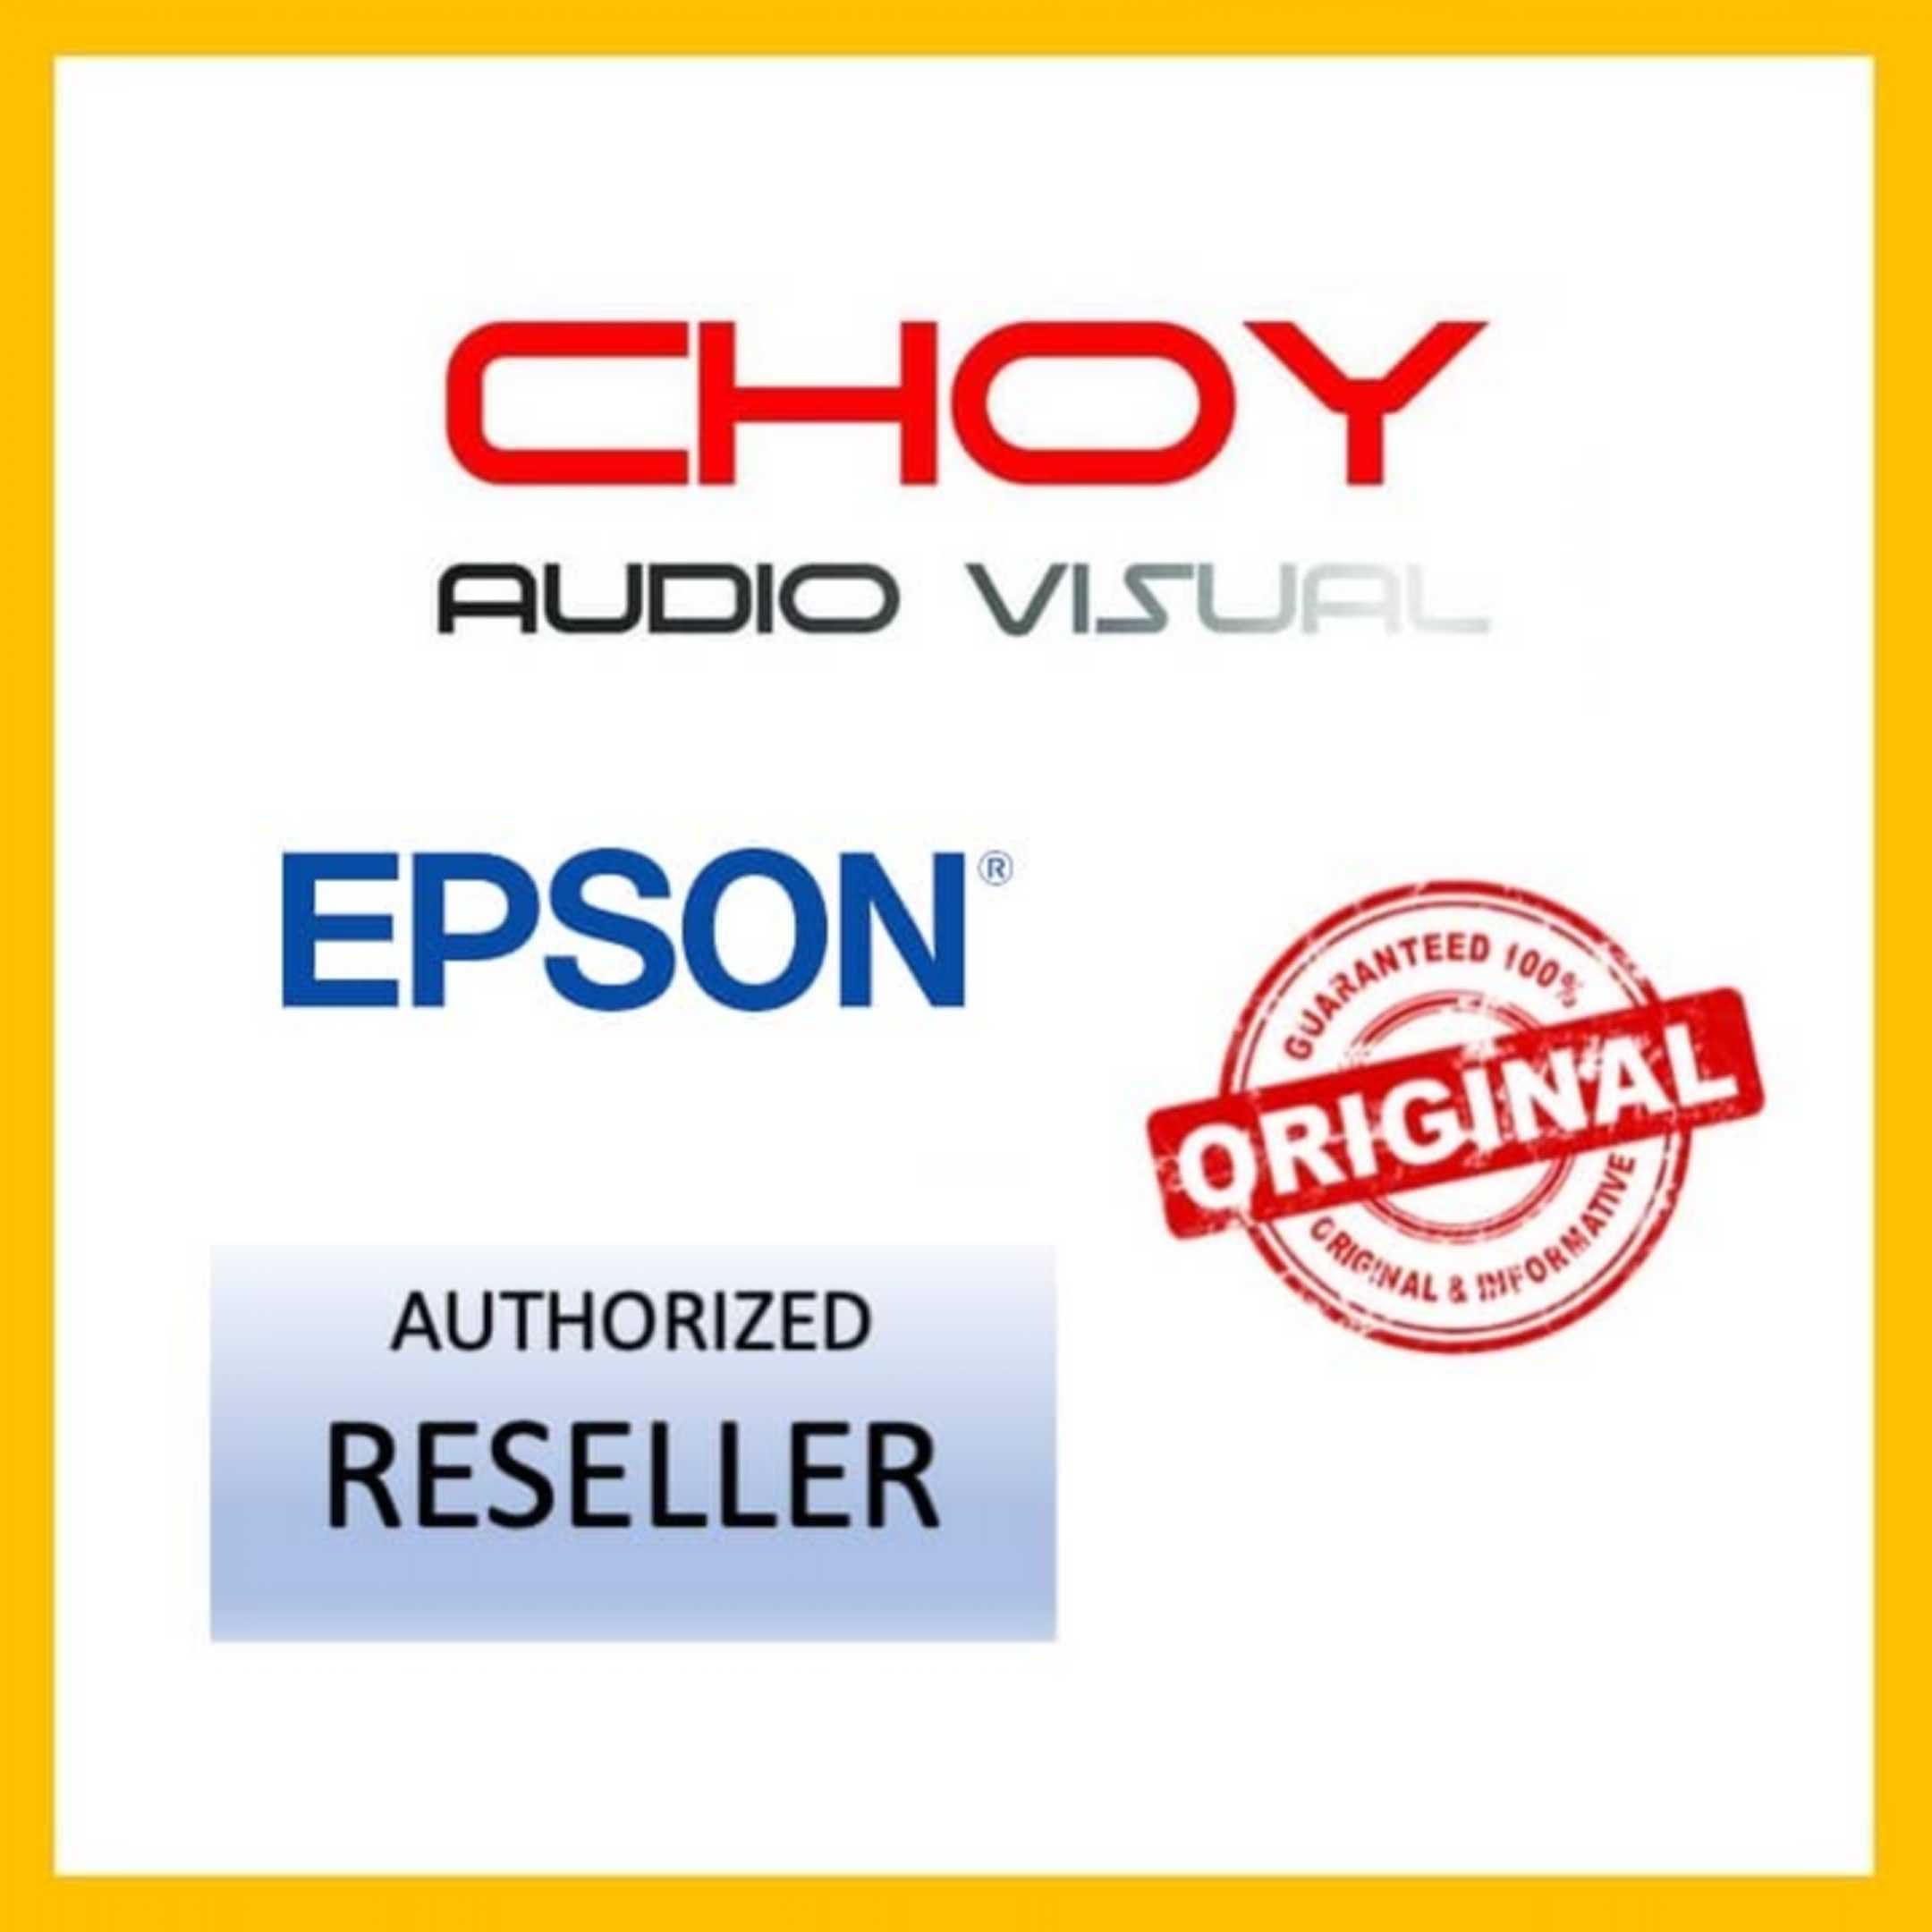 Epson EB-E01 XGA 3LCD Projector - Choy Audio Visual